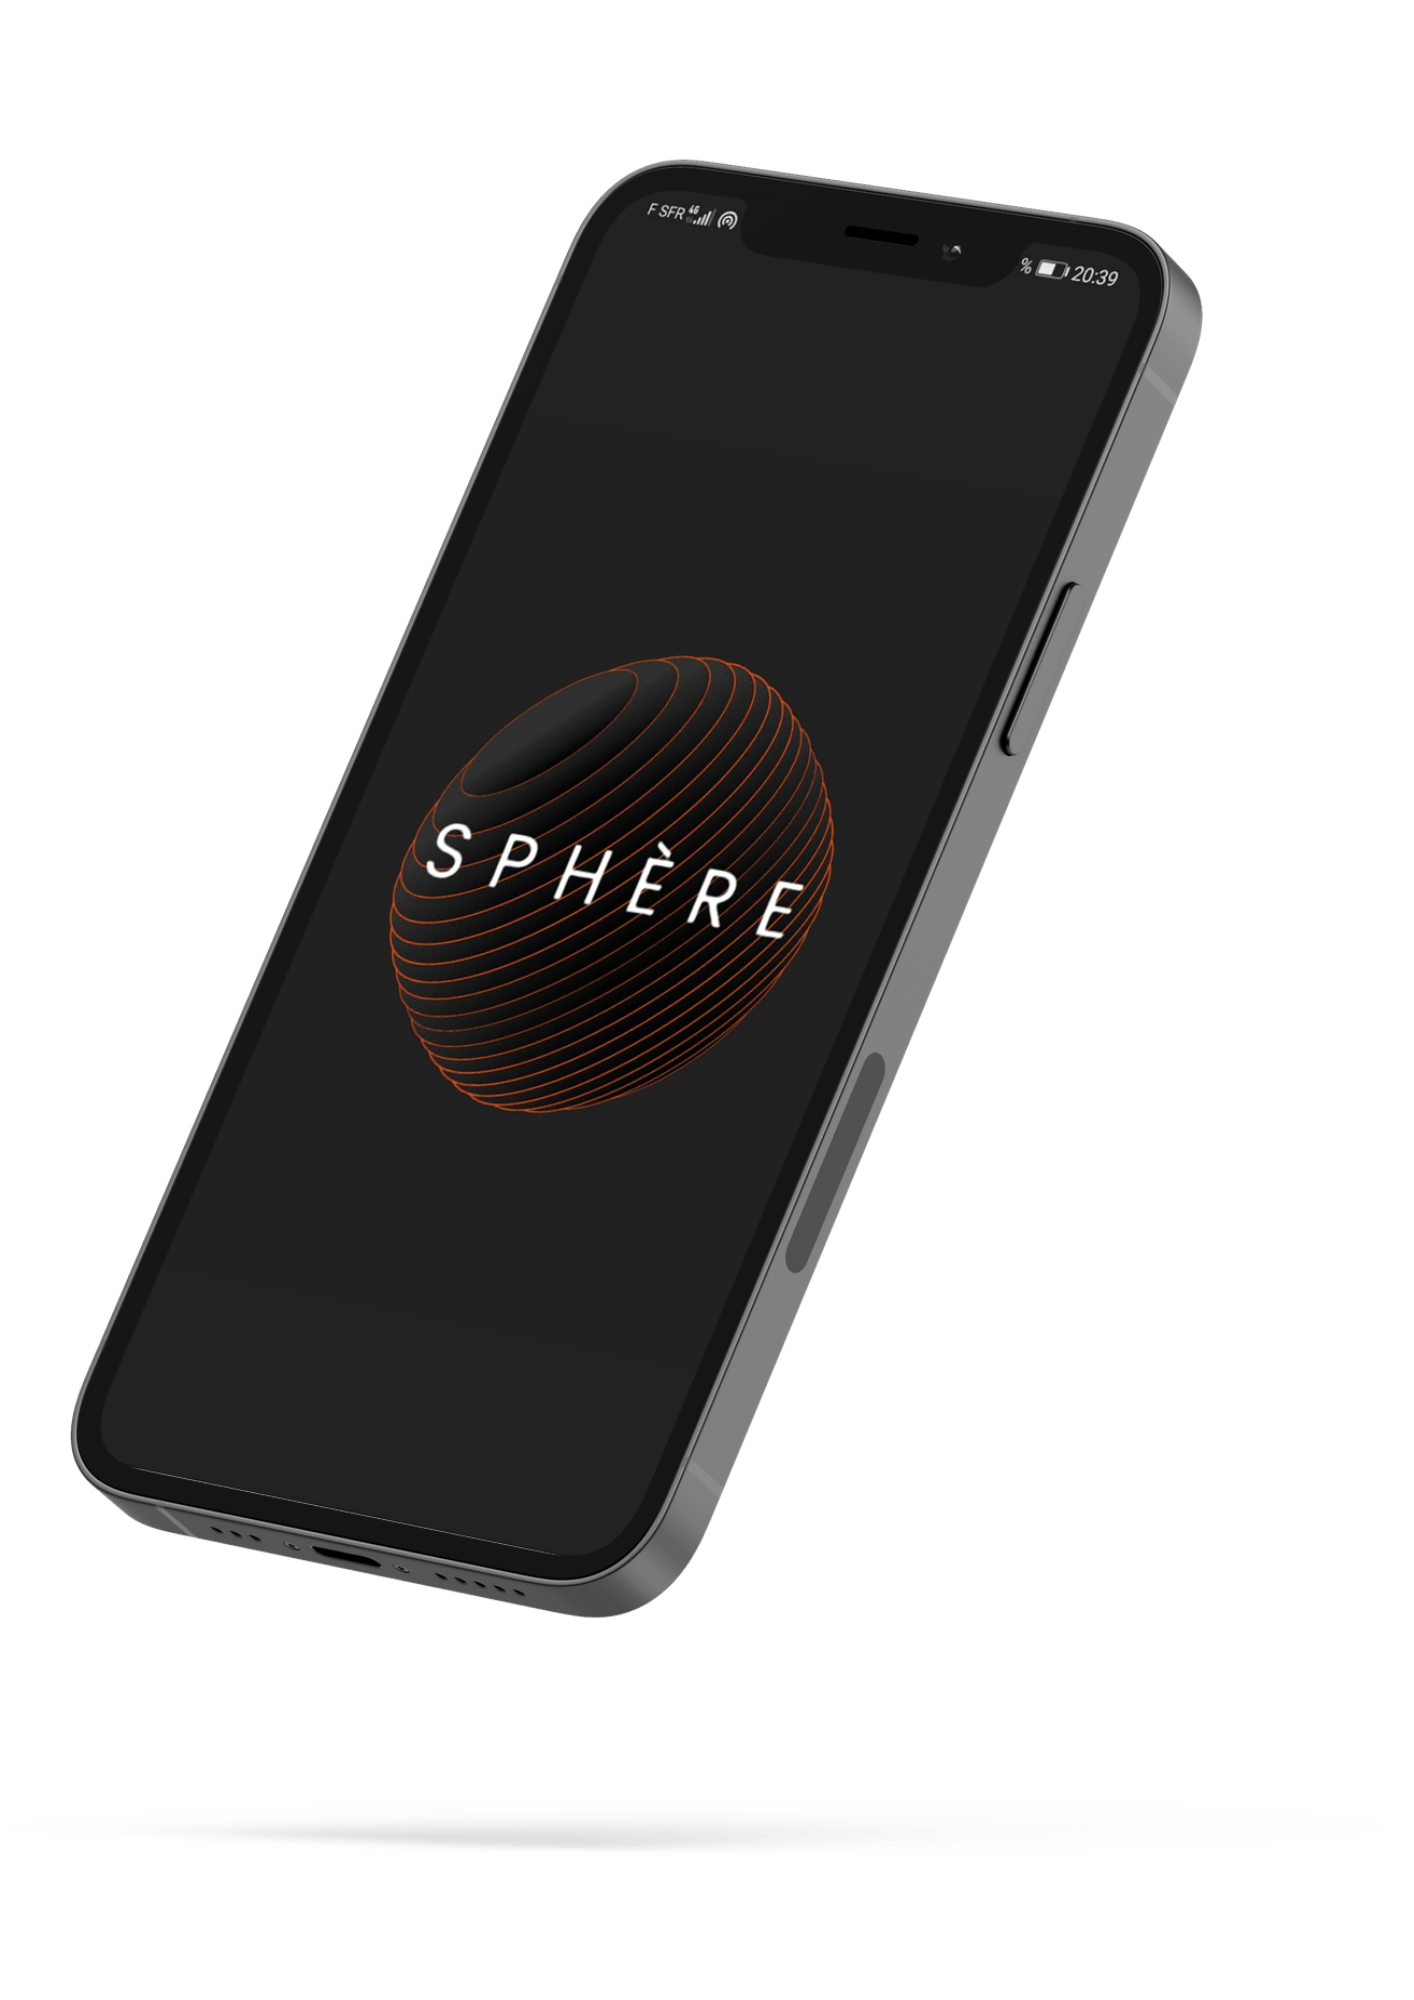 Sphere mobile